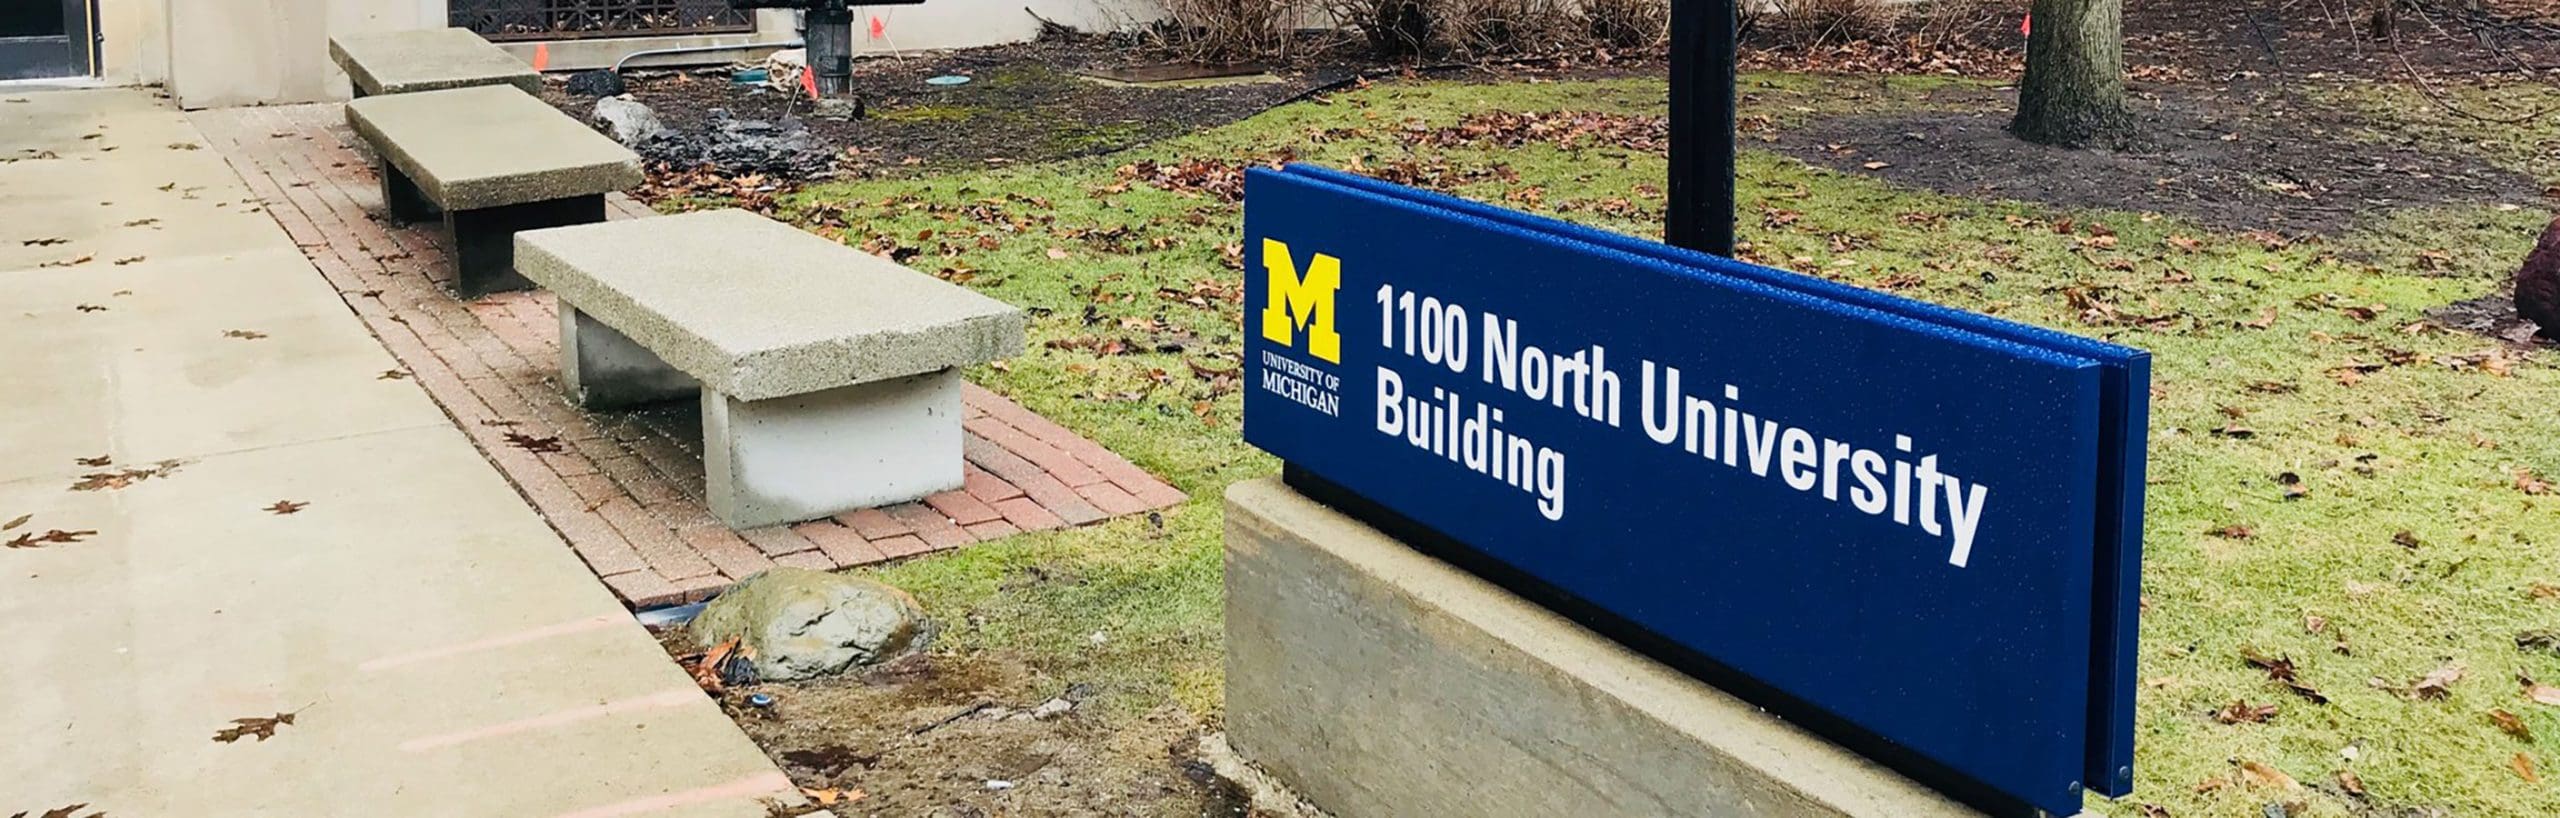 1100 North University Building sign, 2018